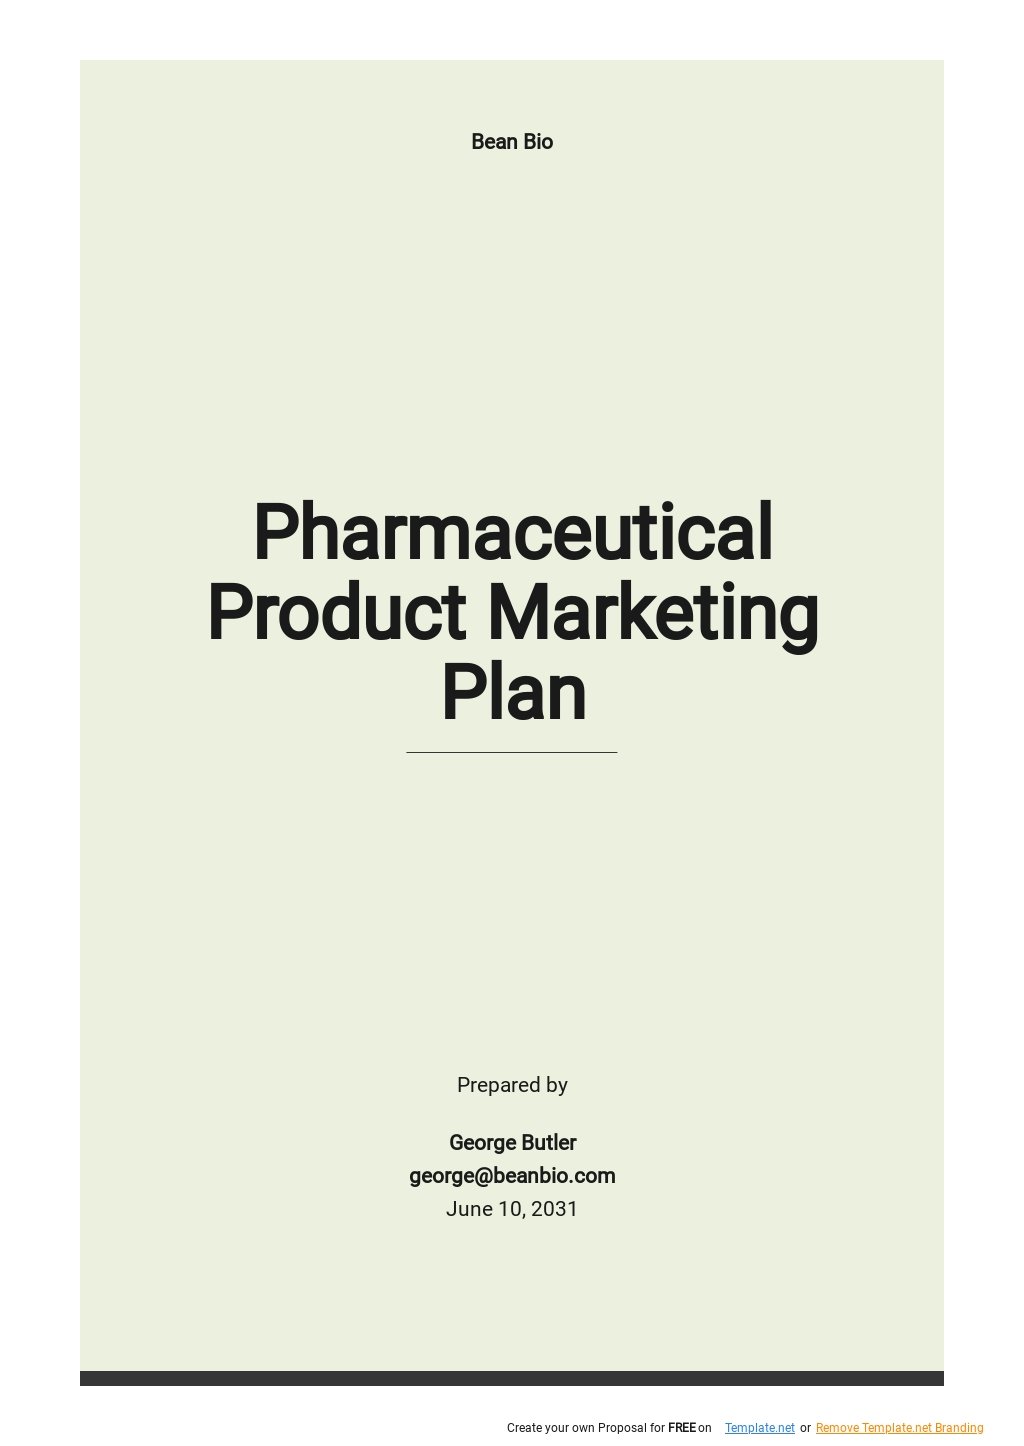 Pharmaceutical Product Marketing Plan Template.jpe